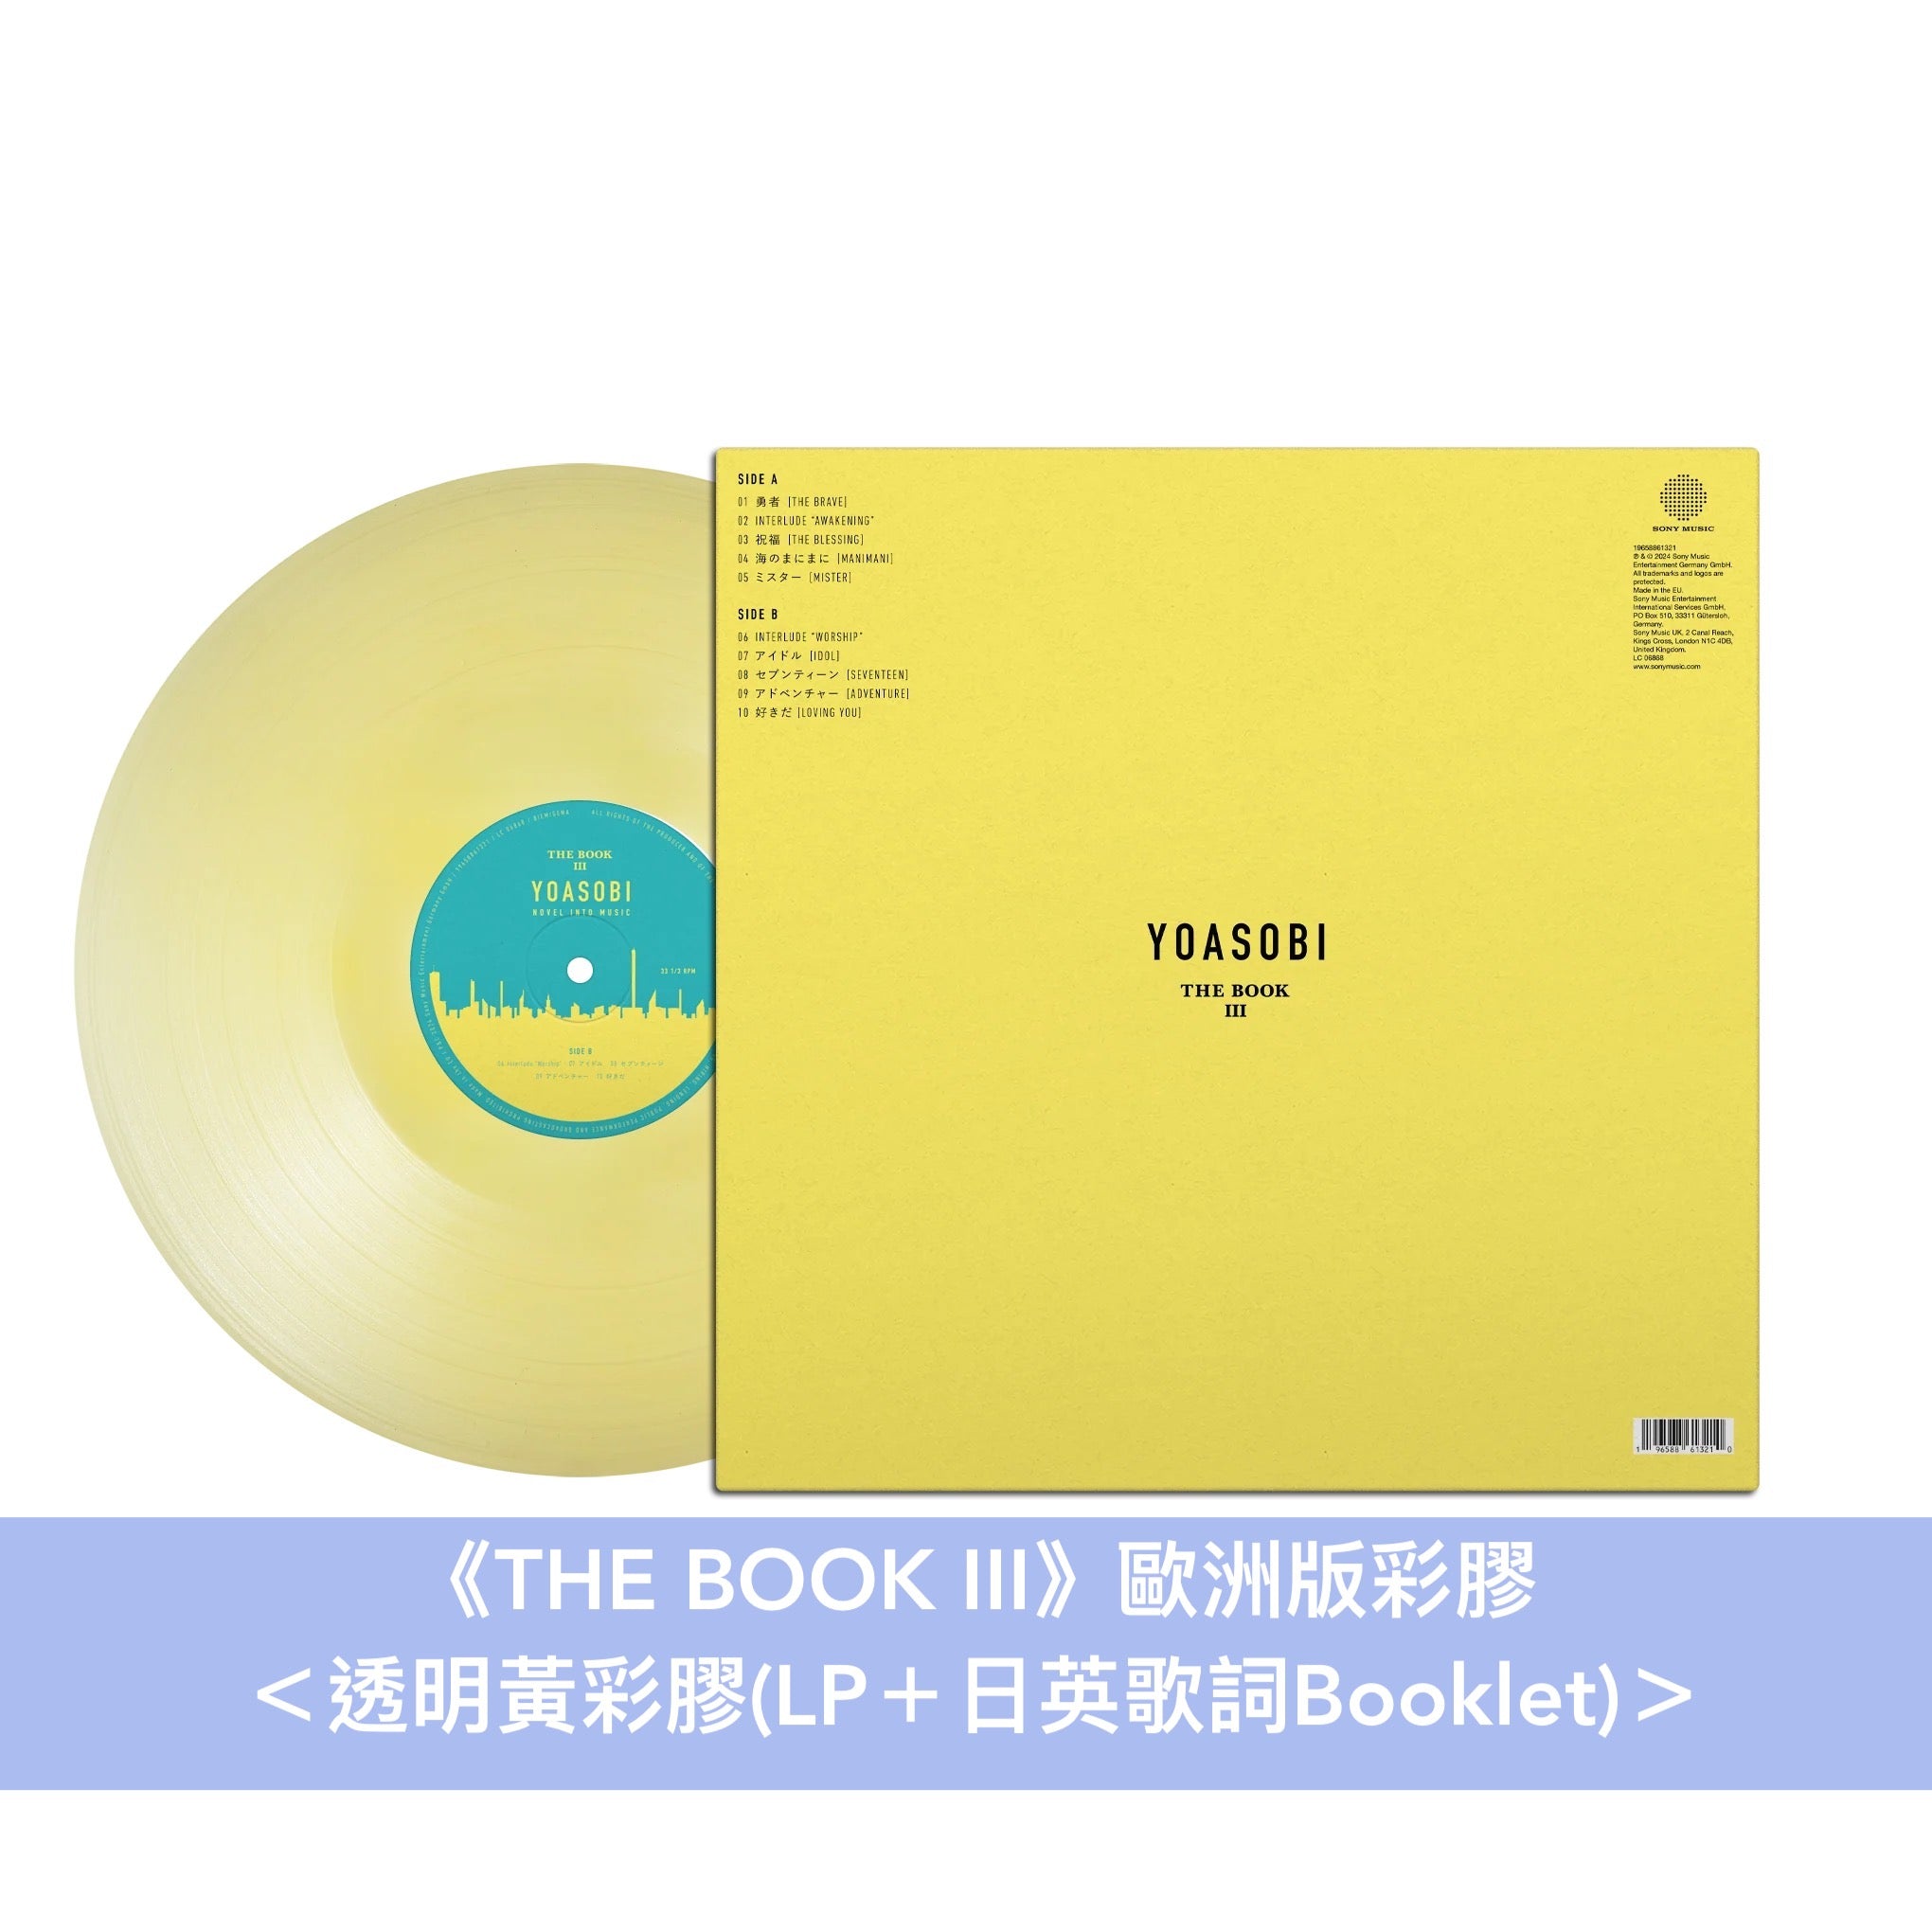 YOASOBI 第1～3張EP 歐洲版彩膠《THE BOOK》＜透明紅彩膠(LP＋Booklet)＞、《THE BOOK  II》＜透明綠彩膠(LP＋Booklet)＞、《THE BOOK III》＜透明黃彩膠(LP＋Booklet)＞